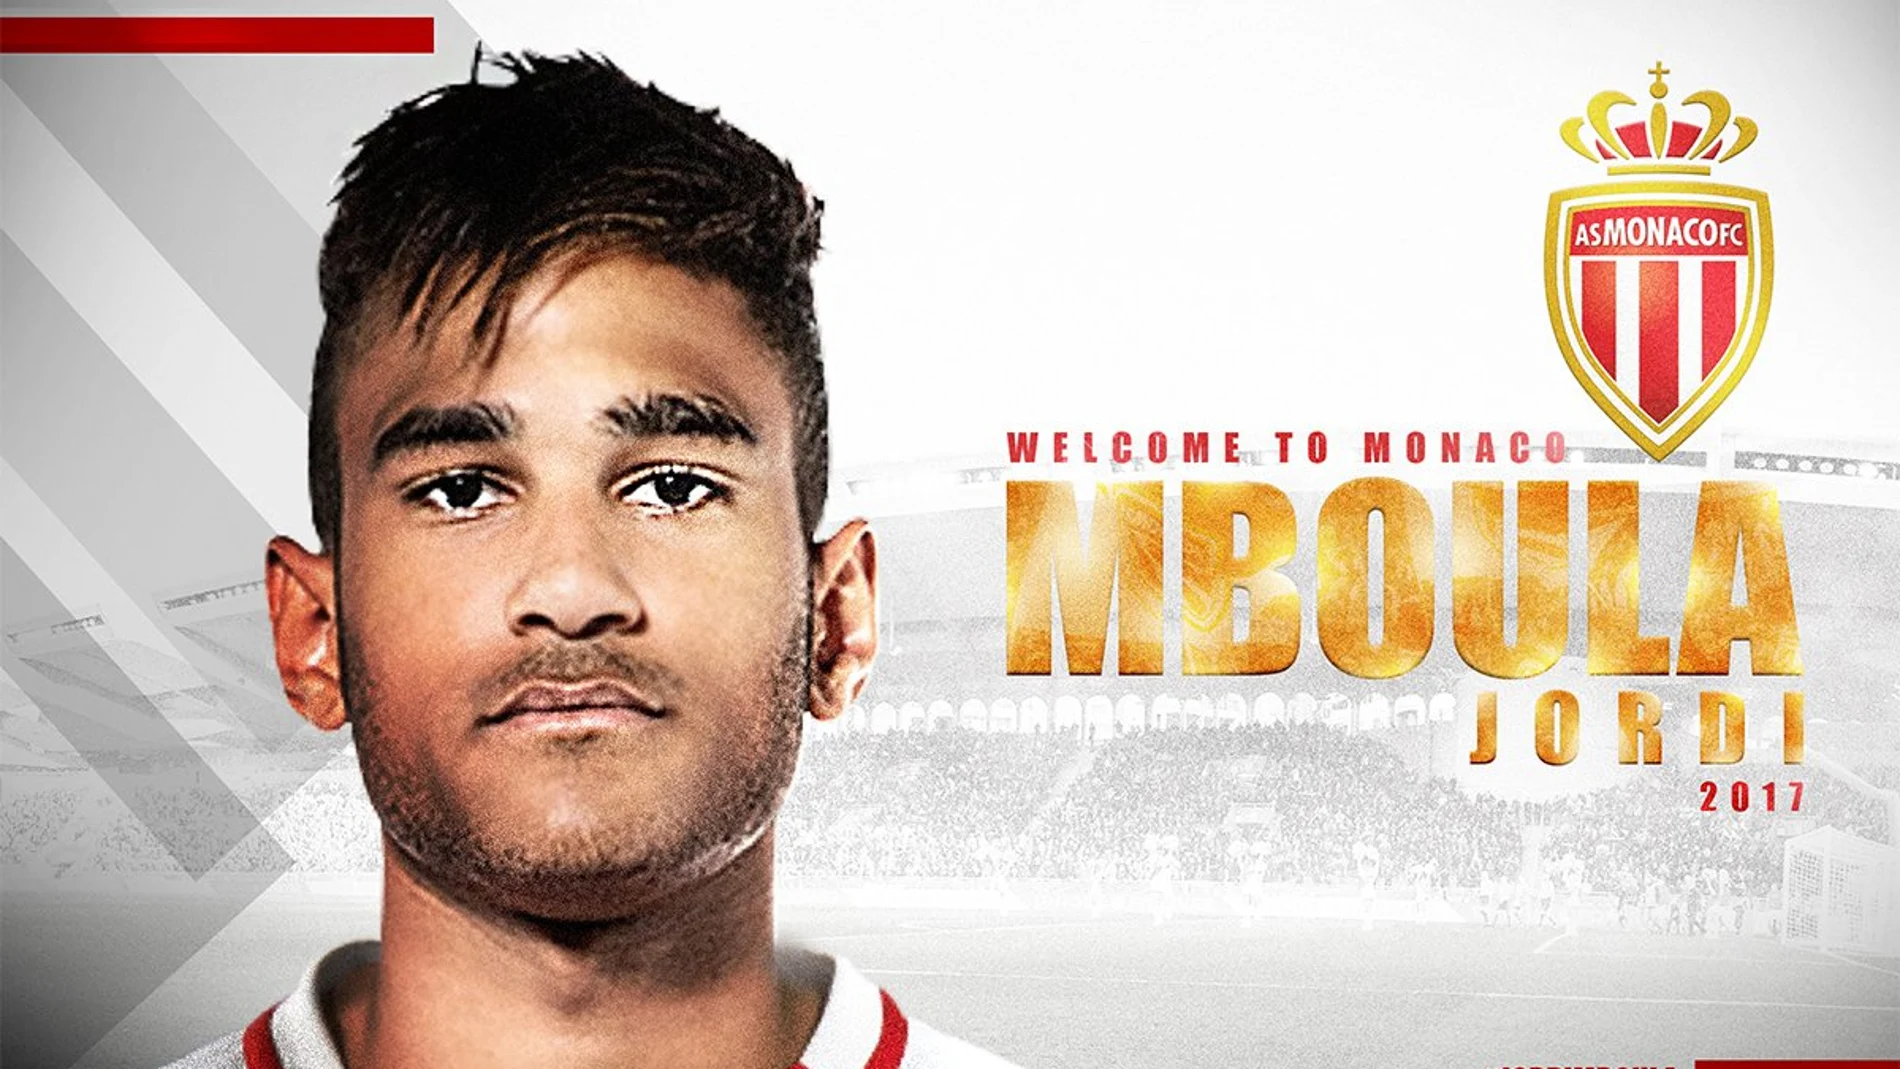 Mboula, nuevo jugador del Mónaco